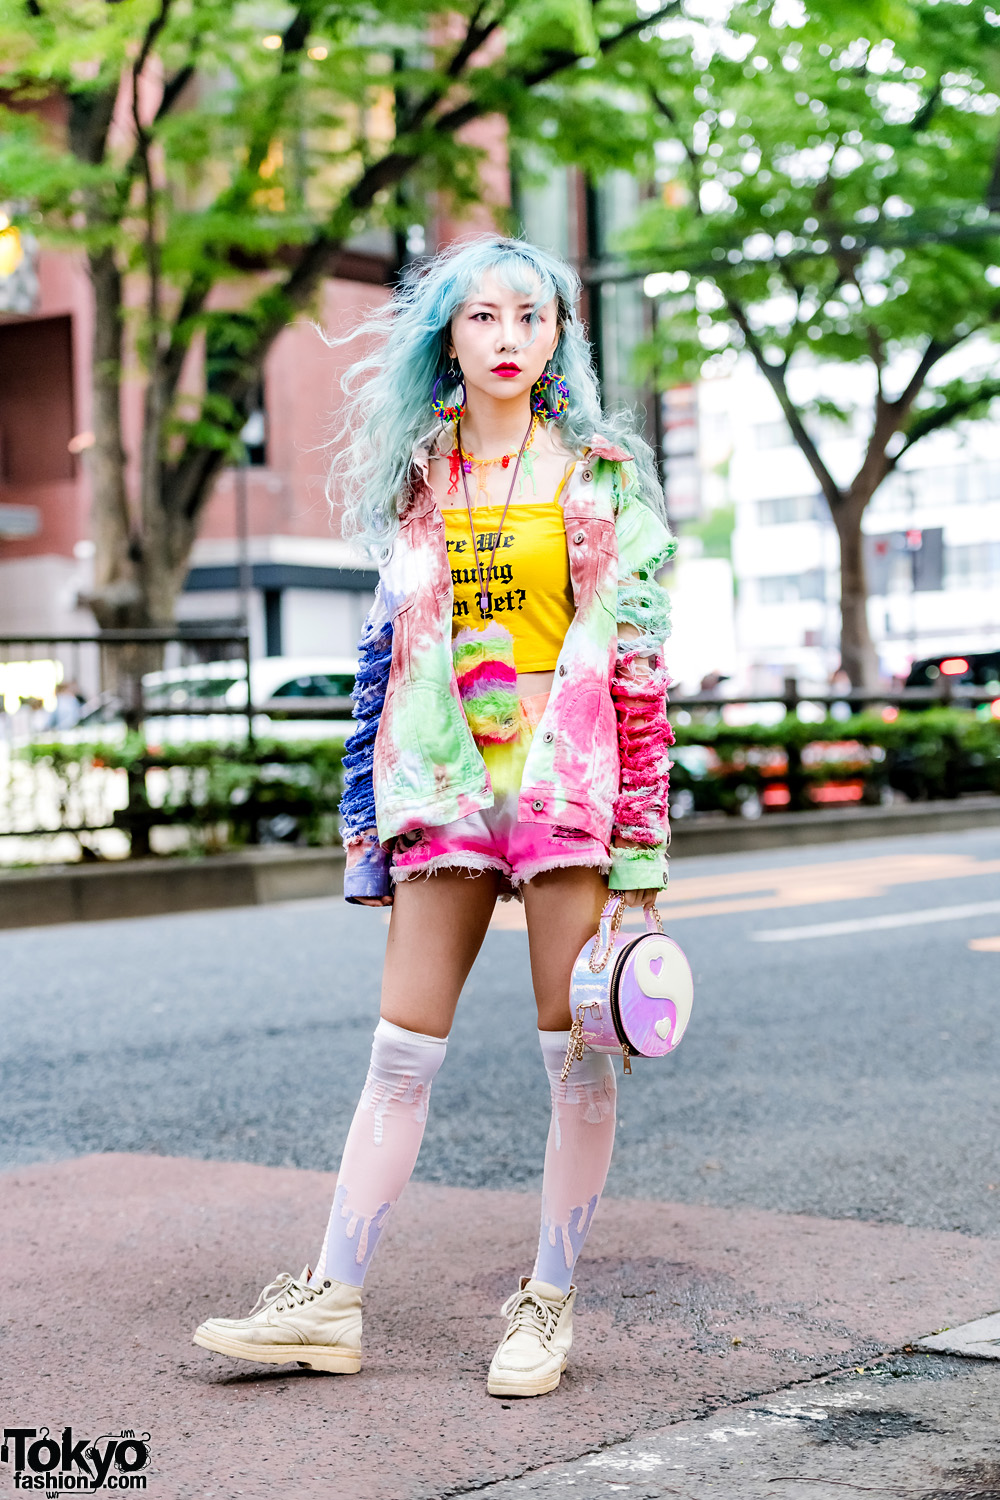 Aqua-haired Harajuku Girl in Handmade Tie-Dye Denim Outfit w/ Crop Top, Paint Socks, Chain Bag & Colorful Accessories